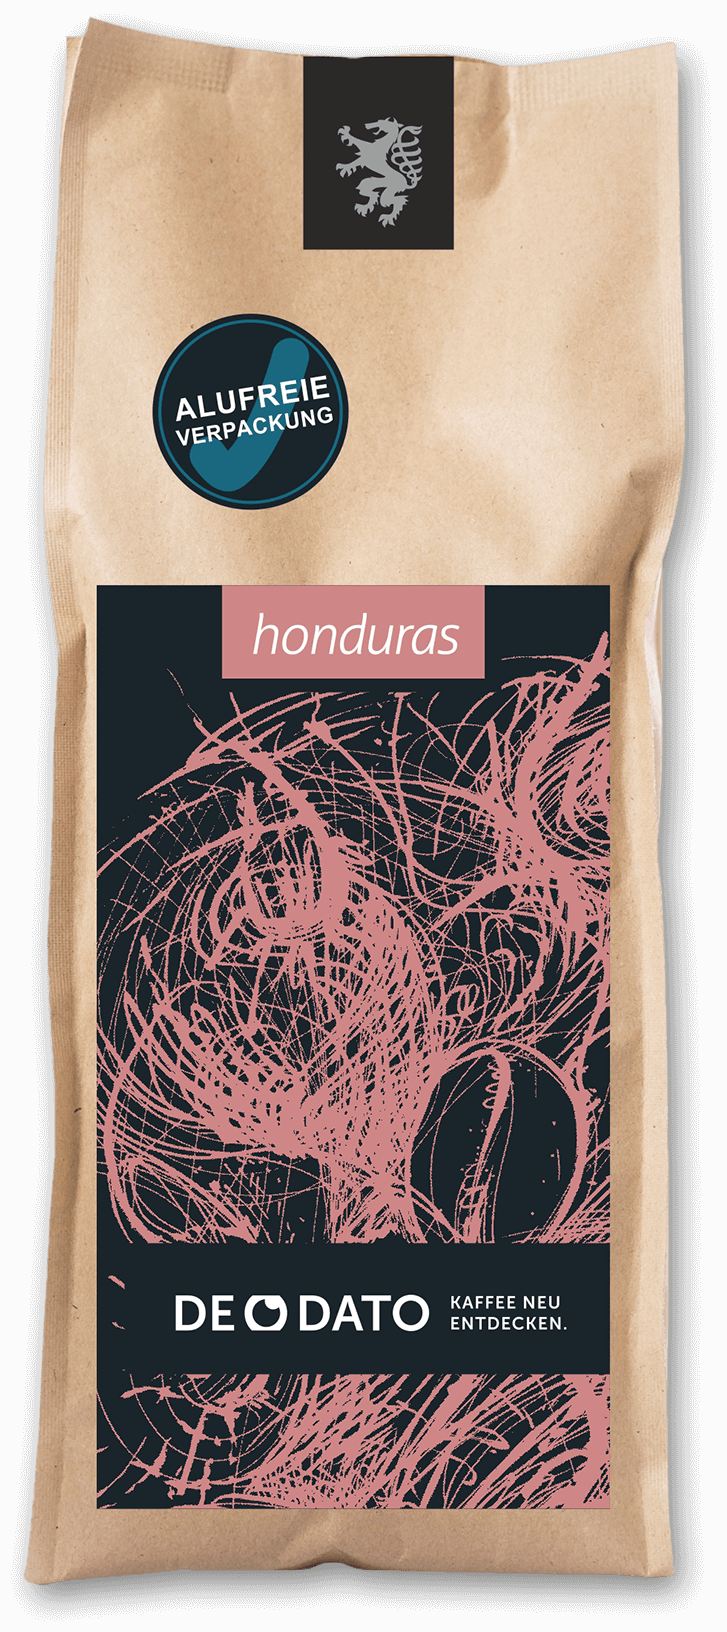 DEODATO Honduras gemahlen - 500 g